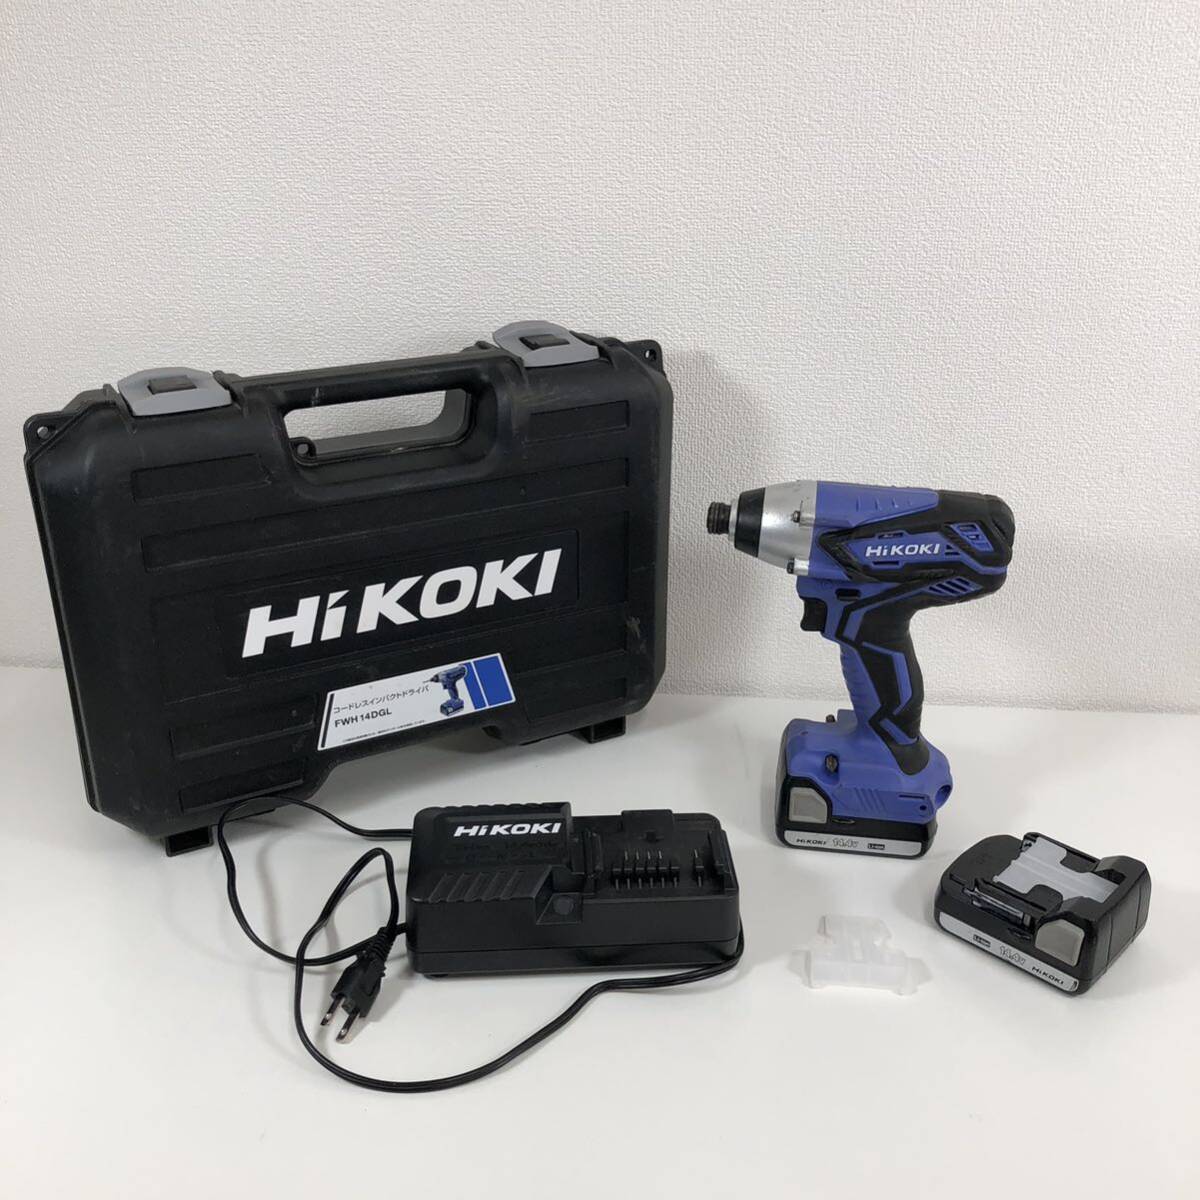 W※ Hi KOKI ハイコーキ コードレス インパクトドライバ 充電式インパクトドライバ FWH 14DGL 14.4V 通電動作確認済み 傷 汚れ有 ケース付の画像1